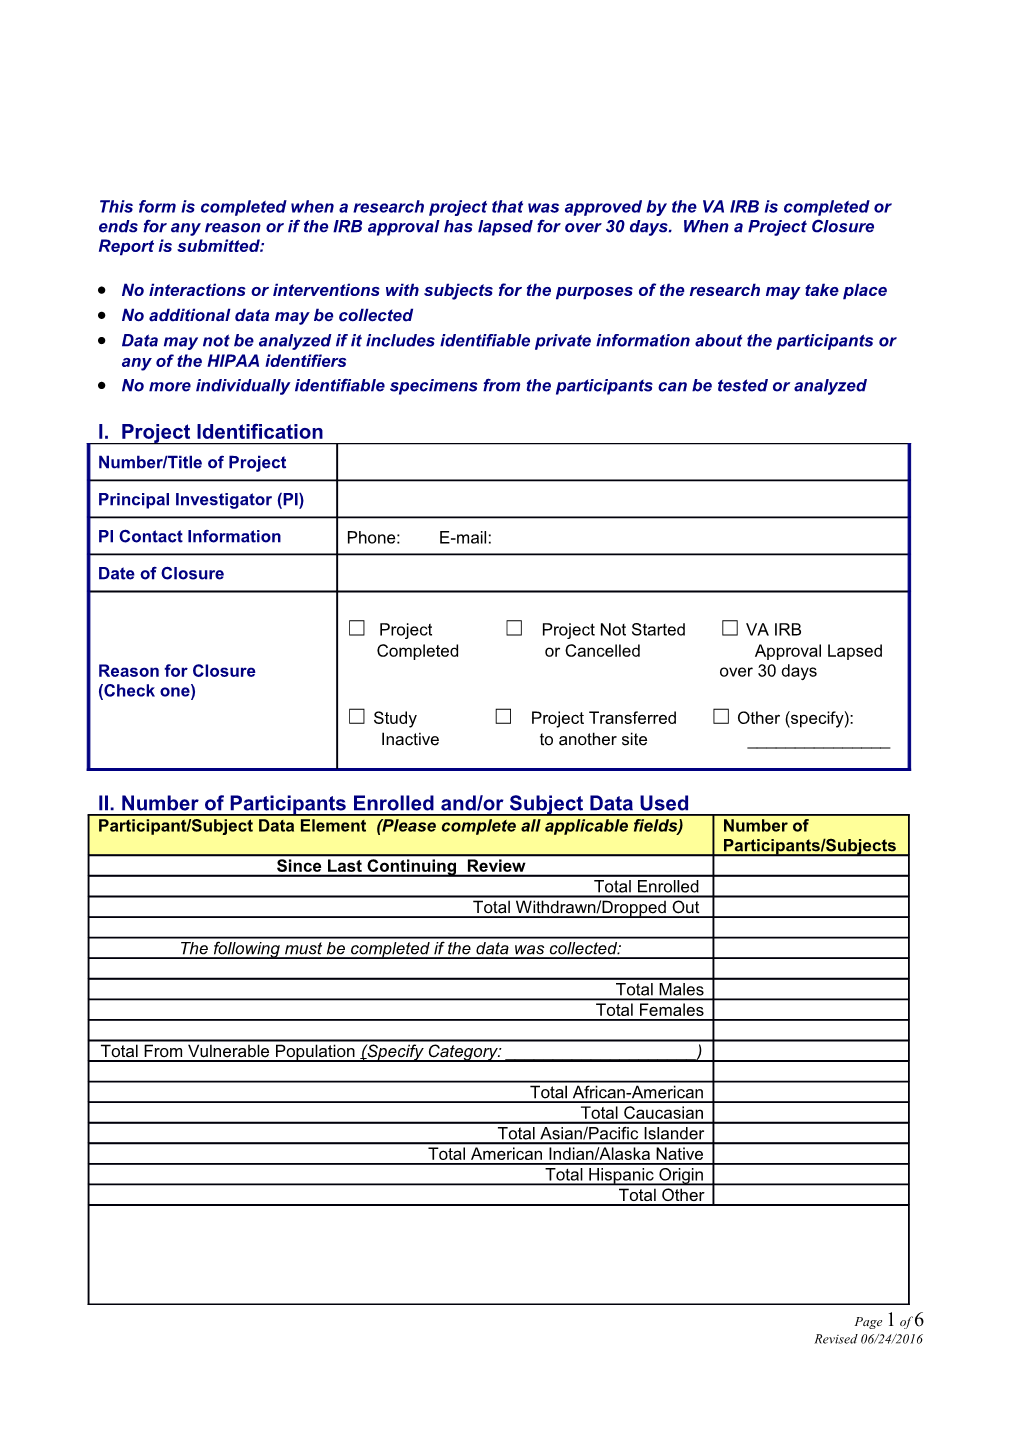 VA Central IRB Form 117A